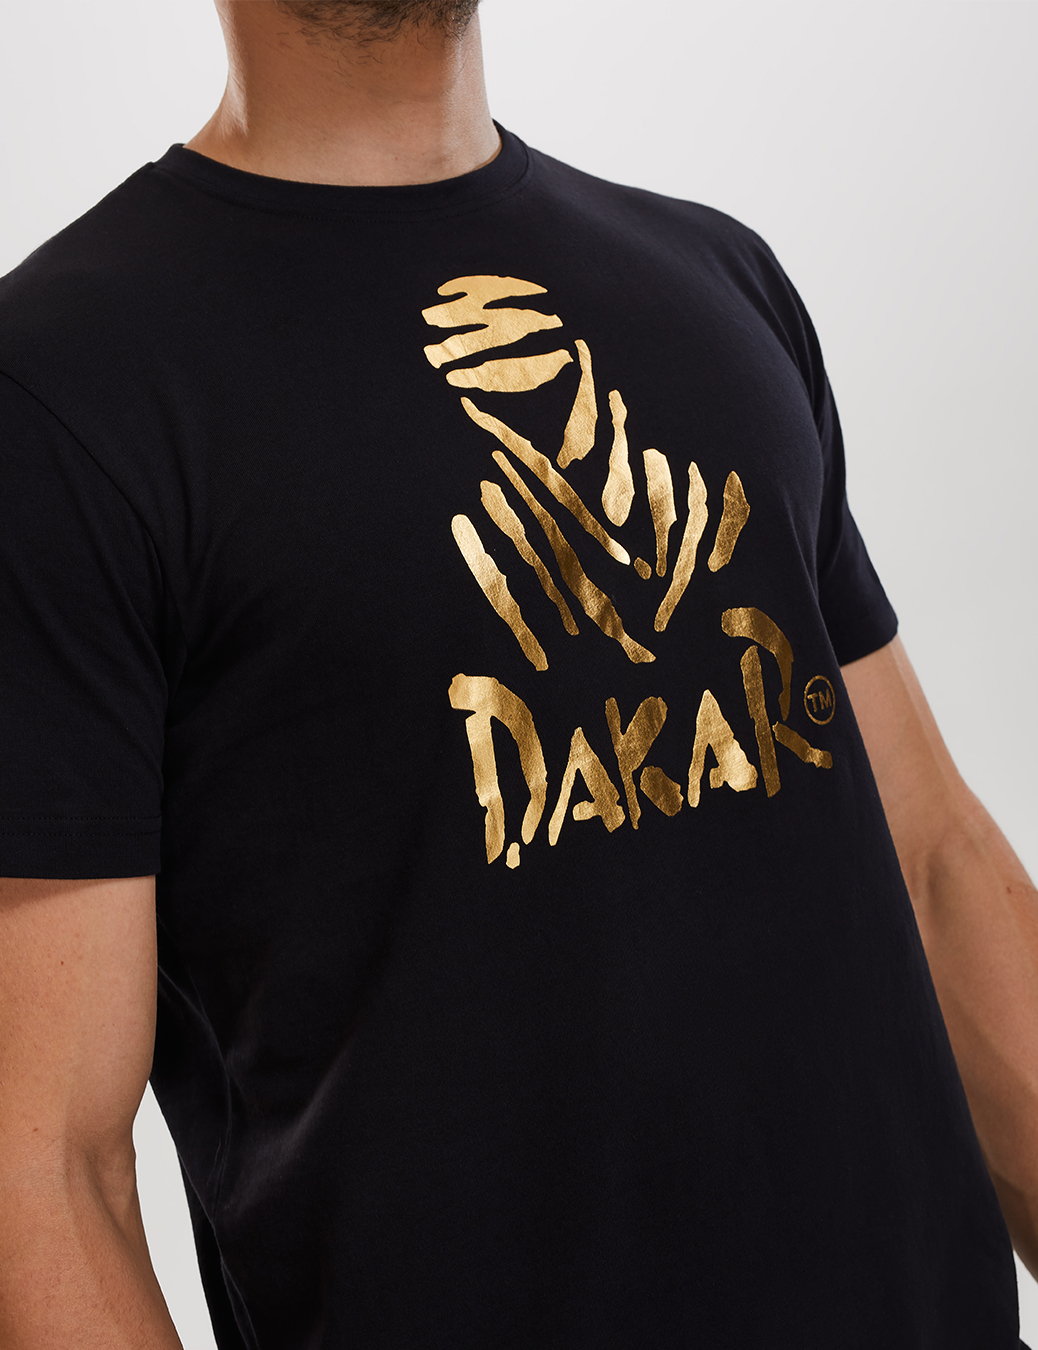 T-Shirt Dakar Logo - Black/Gold VIP Edition